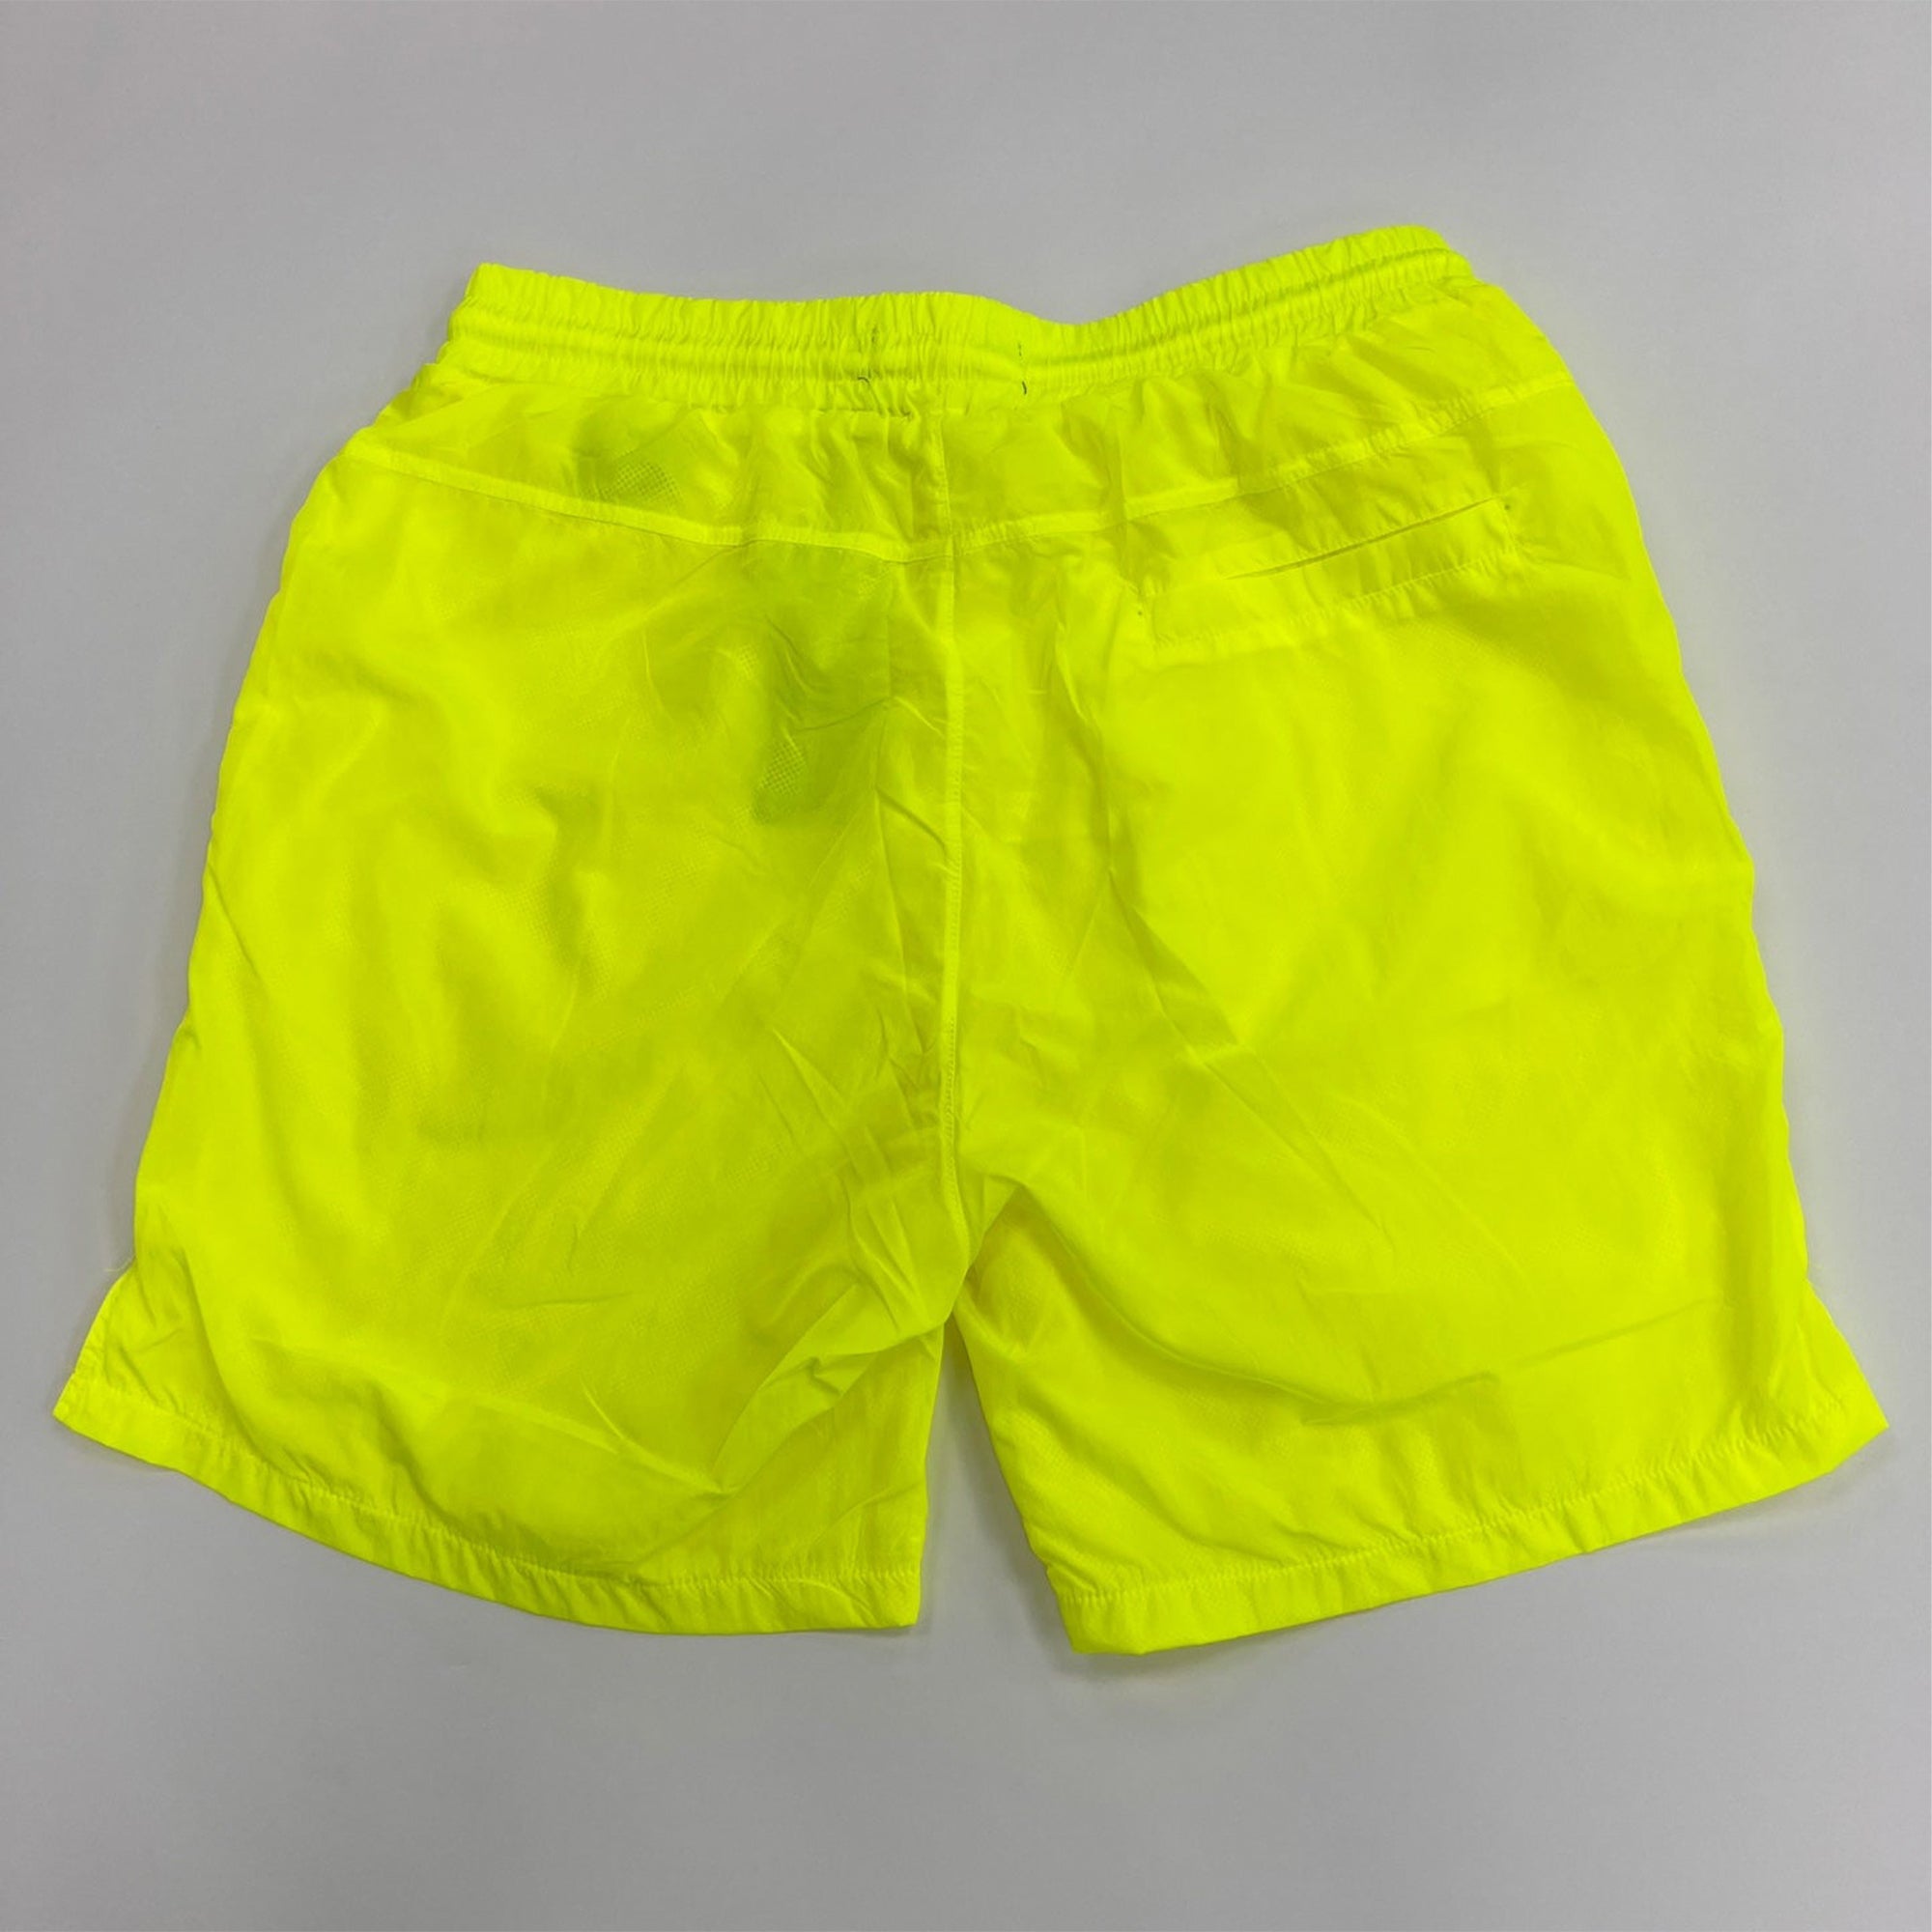 Rebel Minds Men Crinkled Nylon Neon Shorts (Neon Yellow)2